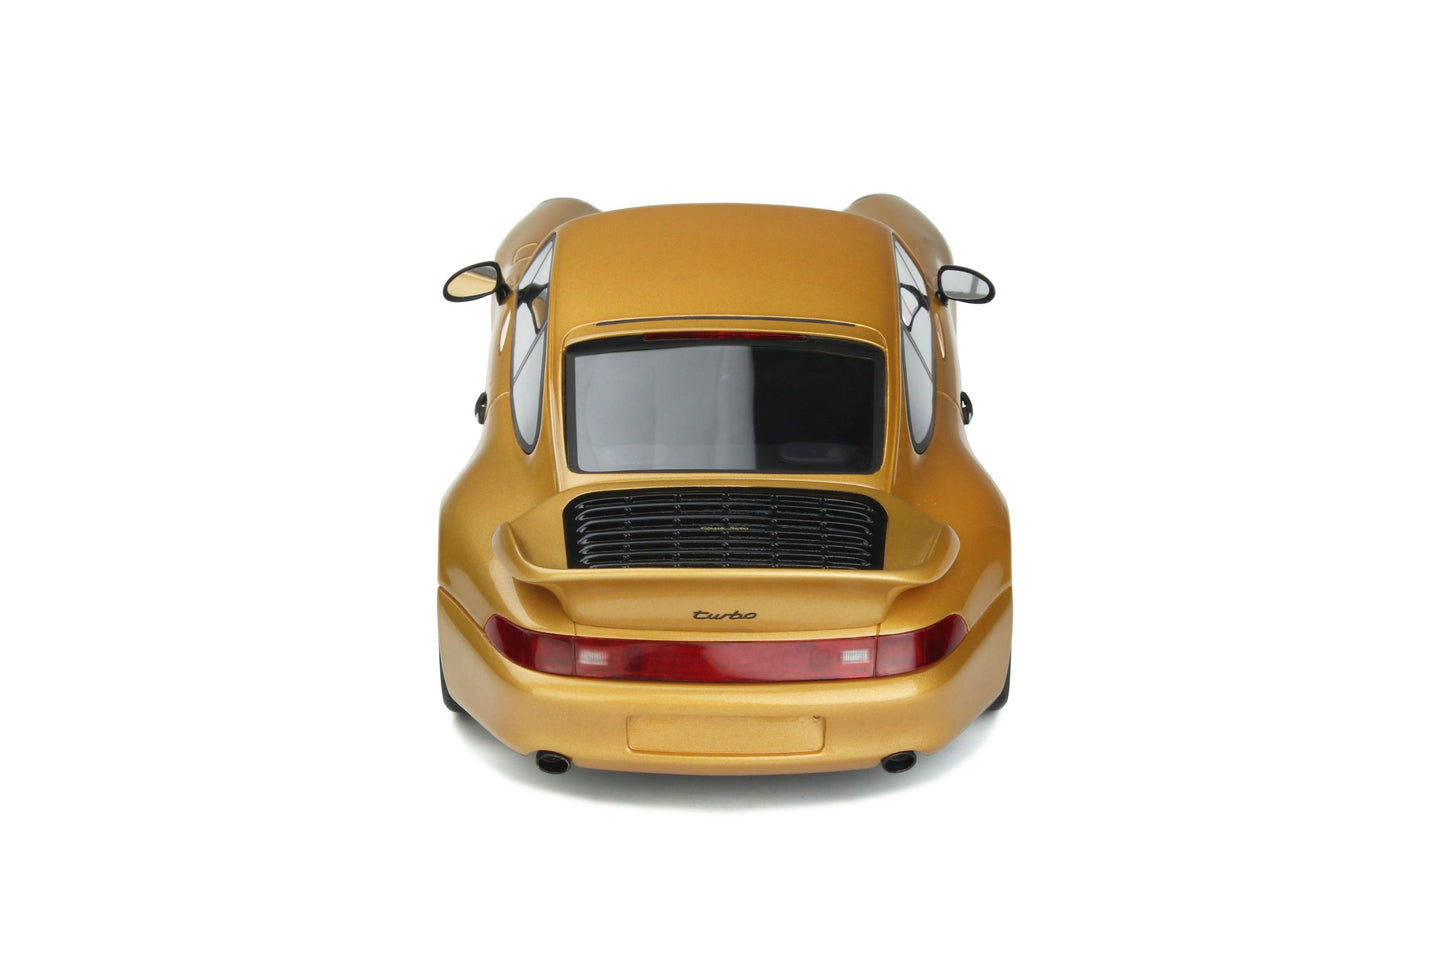 GT Spirit - Porsche 911 (993) Turbo S "Classic Project Gold" (Gold) 1:18 Scale Model Car **[Pre-Order]**